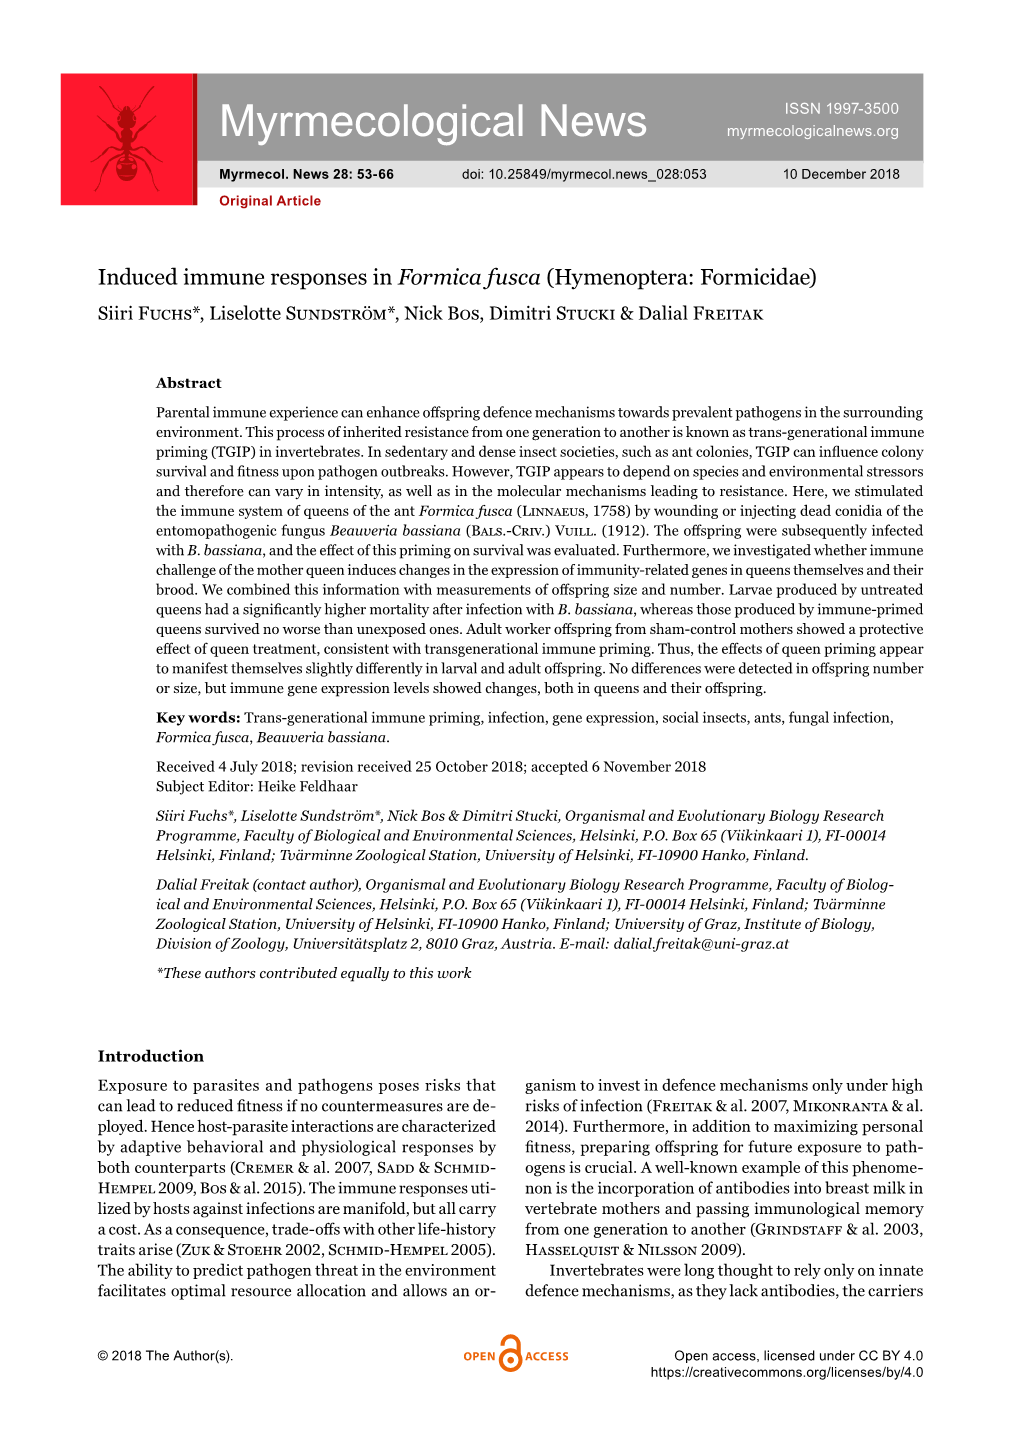 Induced Immune Responses in Formica Fusca (Hymeno­Ptera: Formicidae) Siiri Fuchs*, Liselotte Sundström*, Nick Bos, Dimitri Stucki & Dalial Freitak